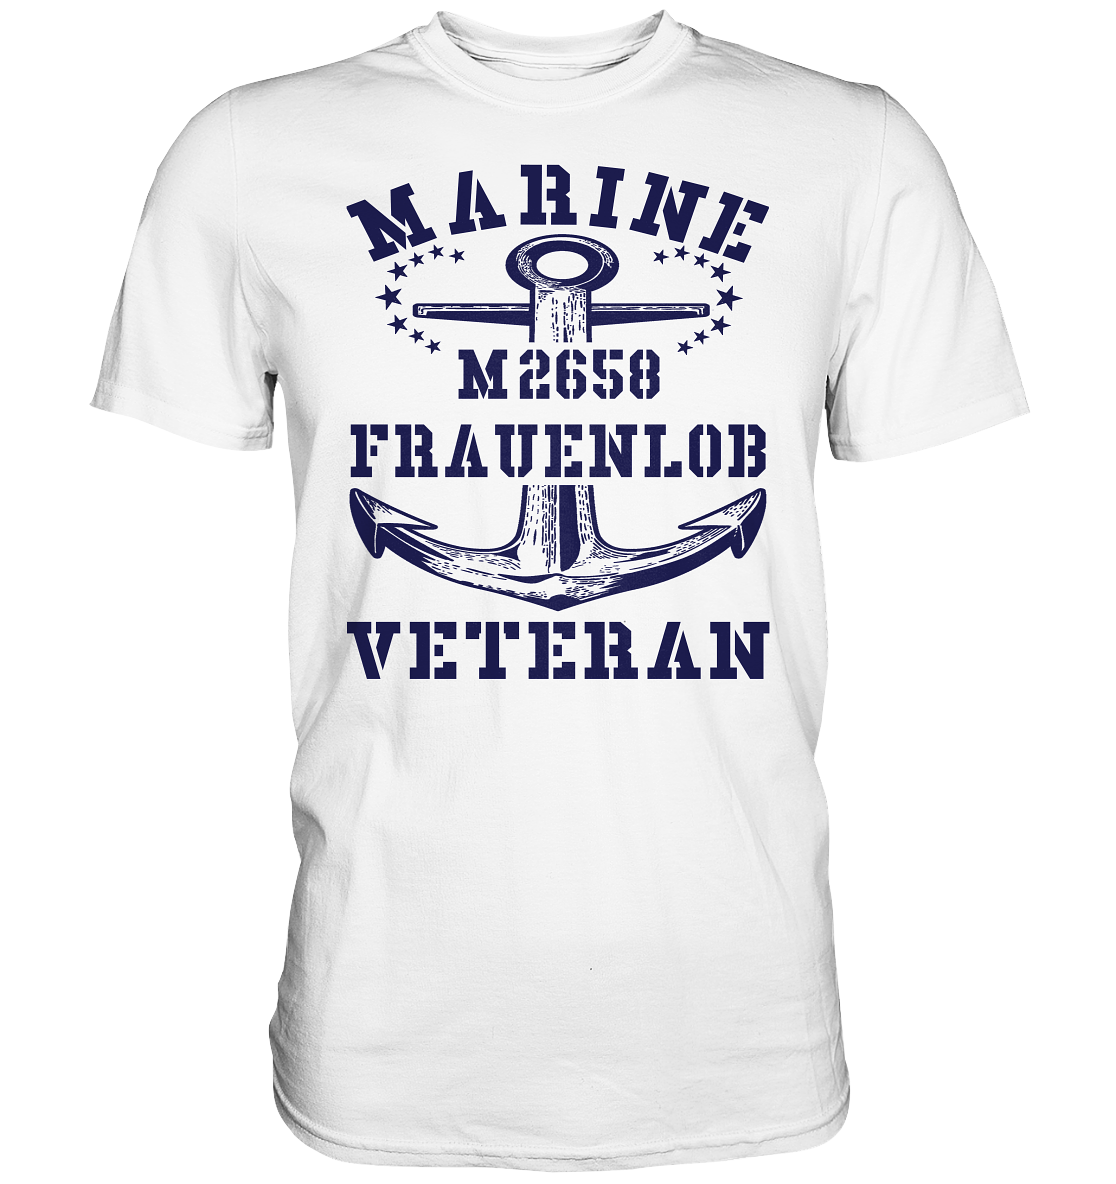 BiMi M2658 FRAUENLOB Marine Veteran - Premium Shirt